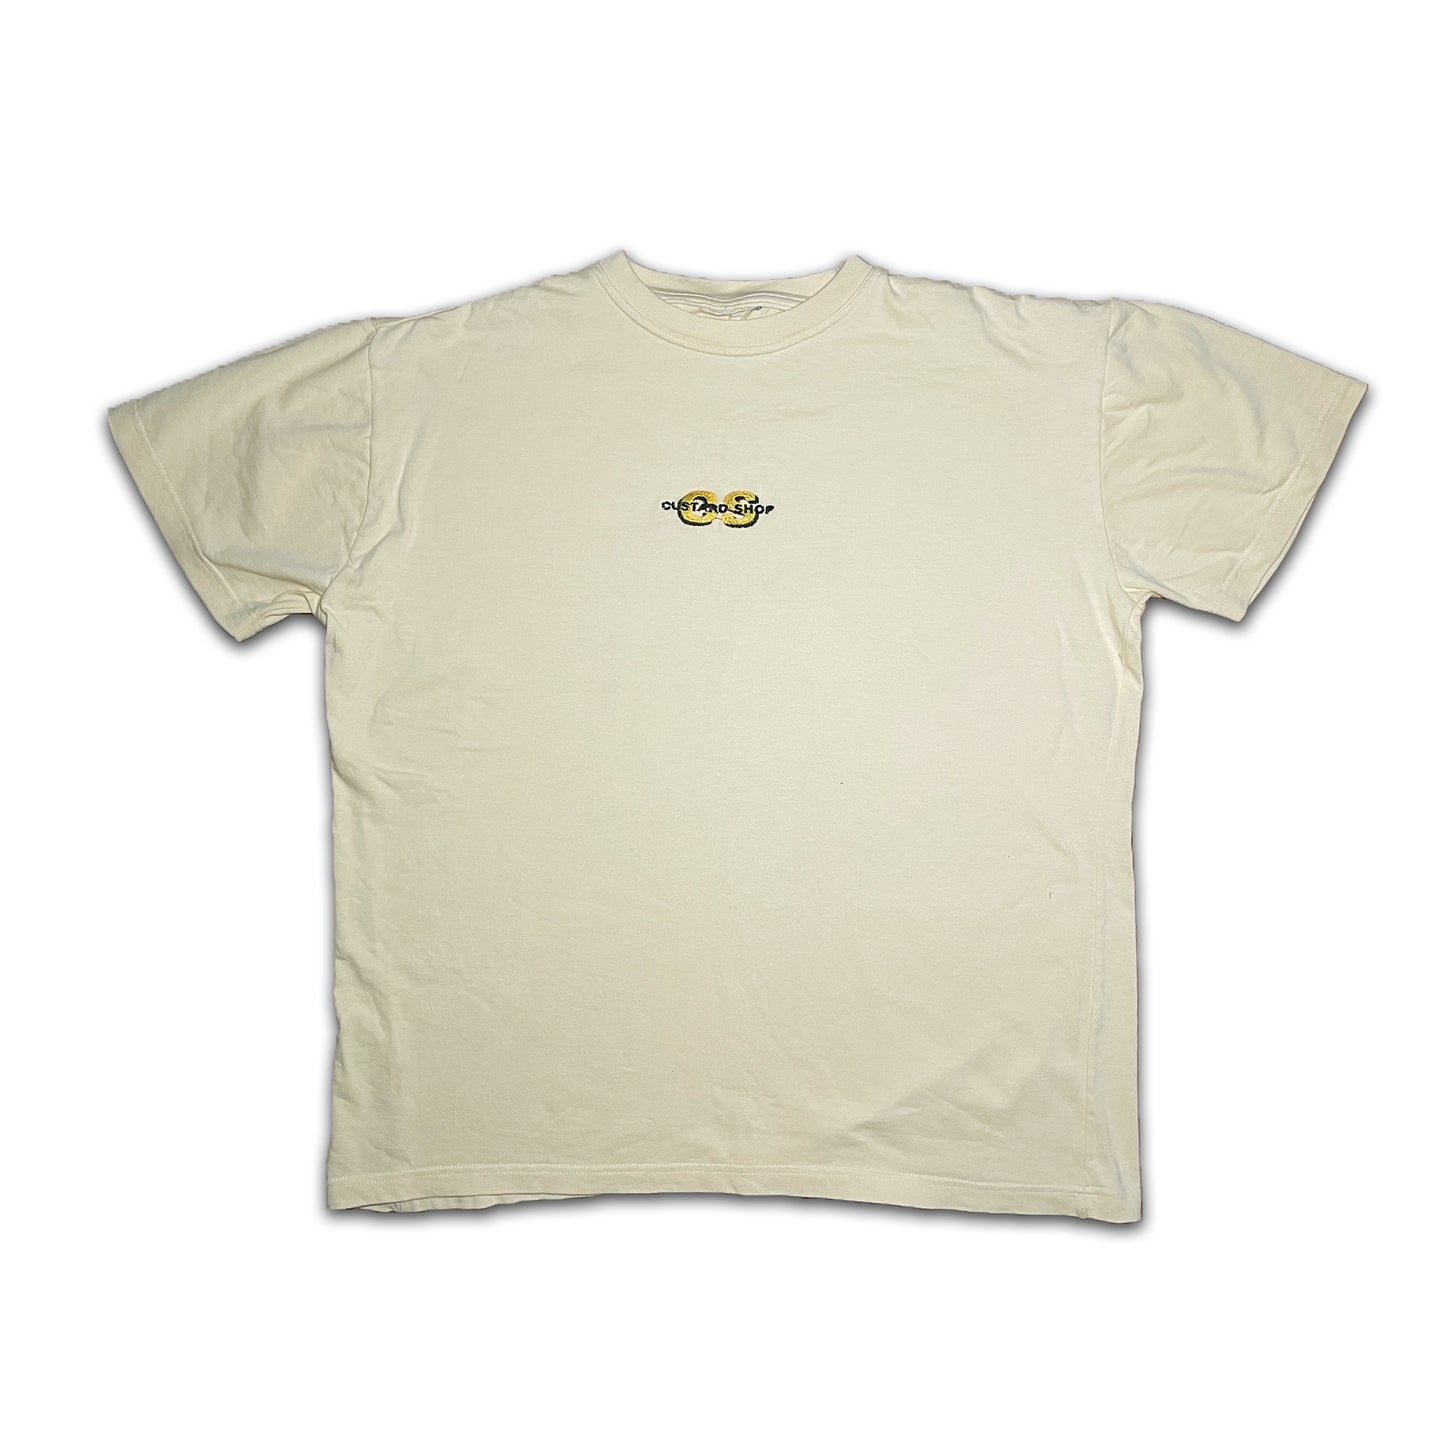 Custard Reclaimed Light Yellow T-Shirt | Size Large